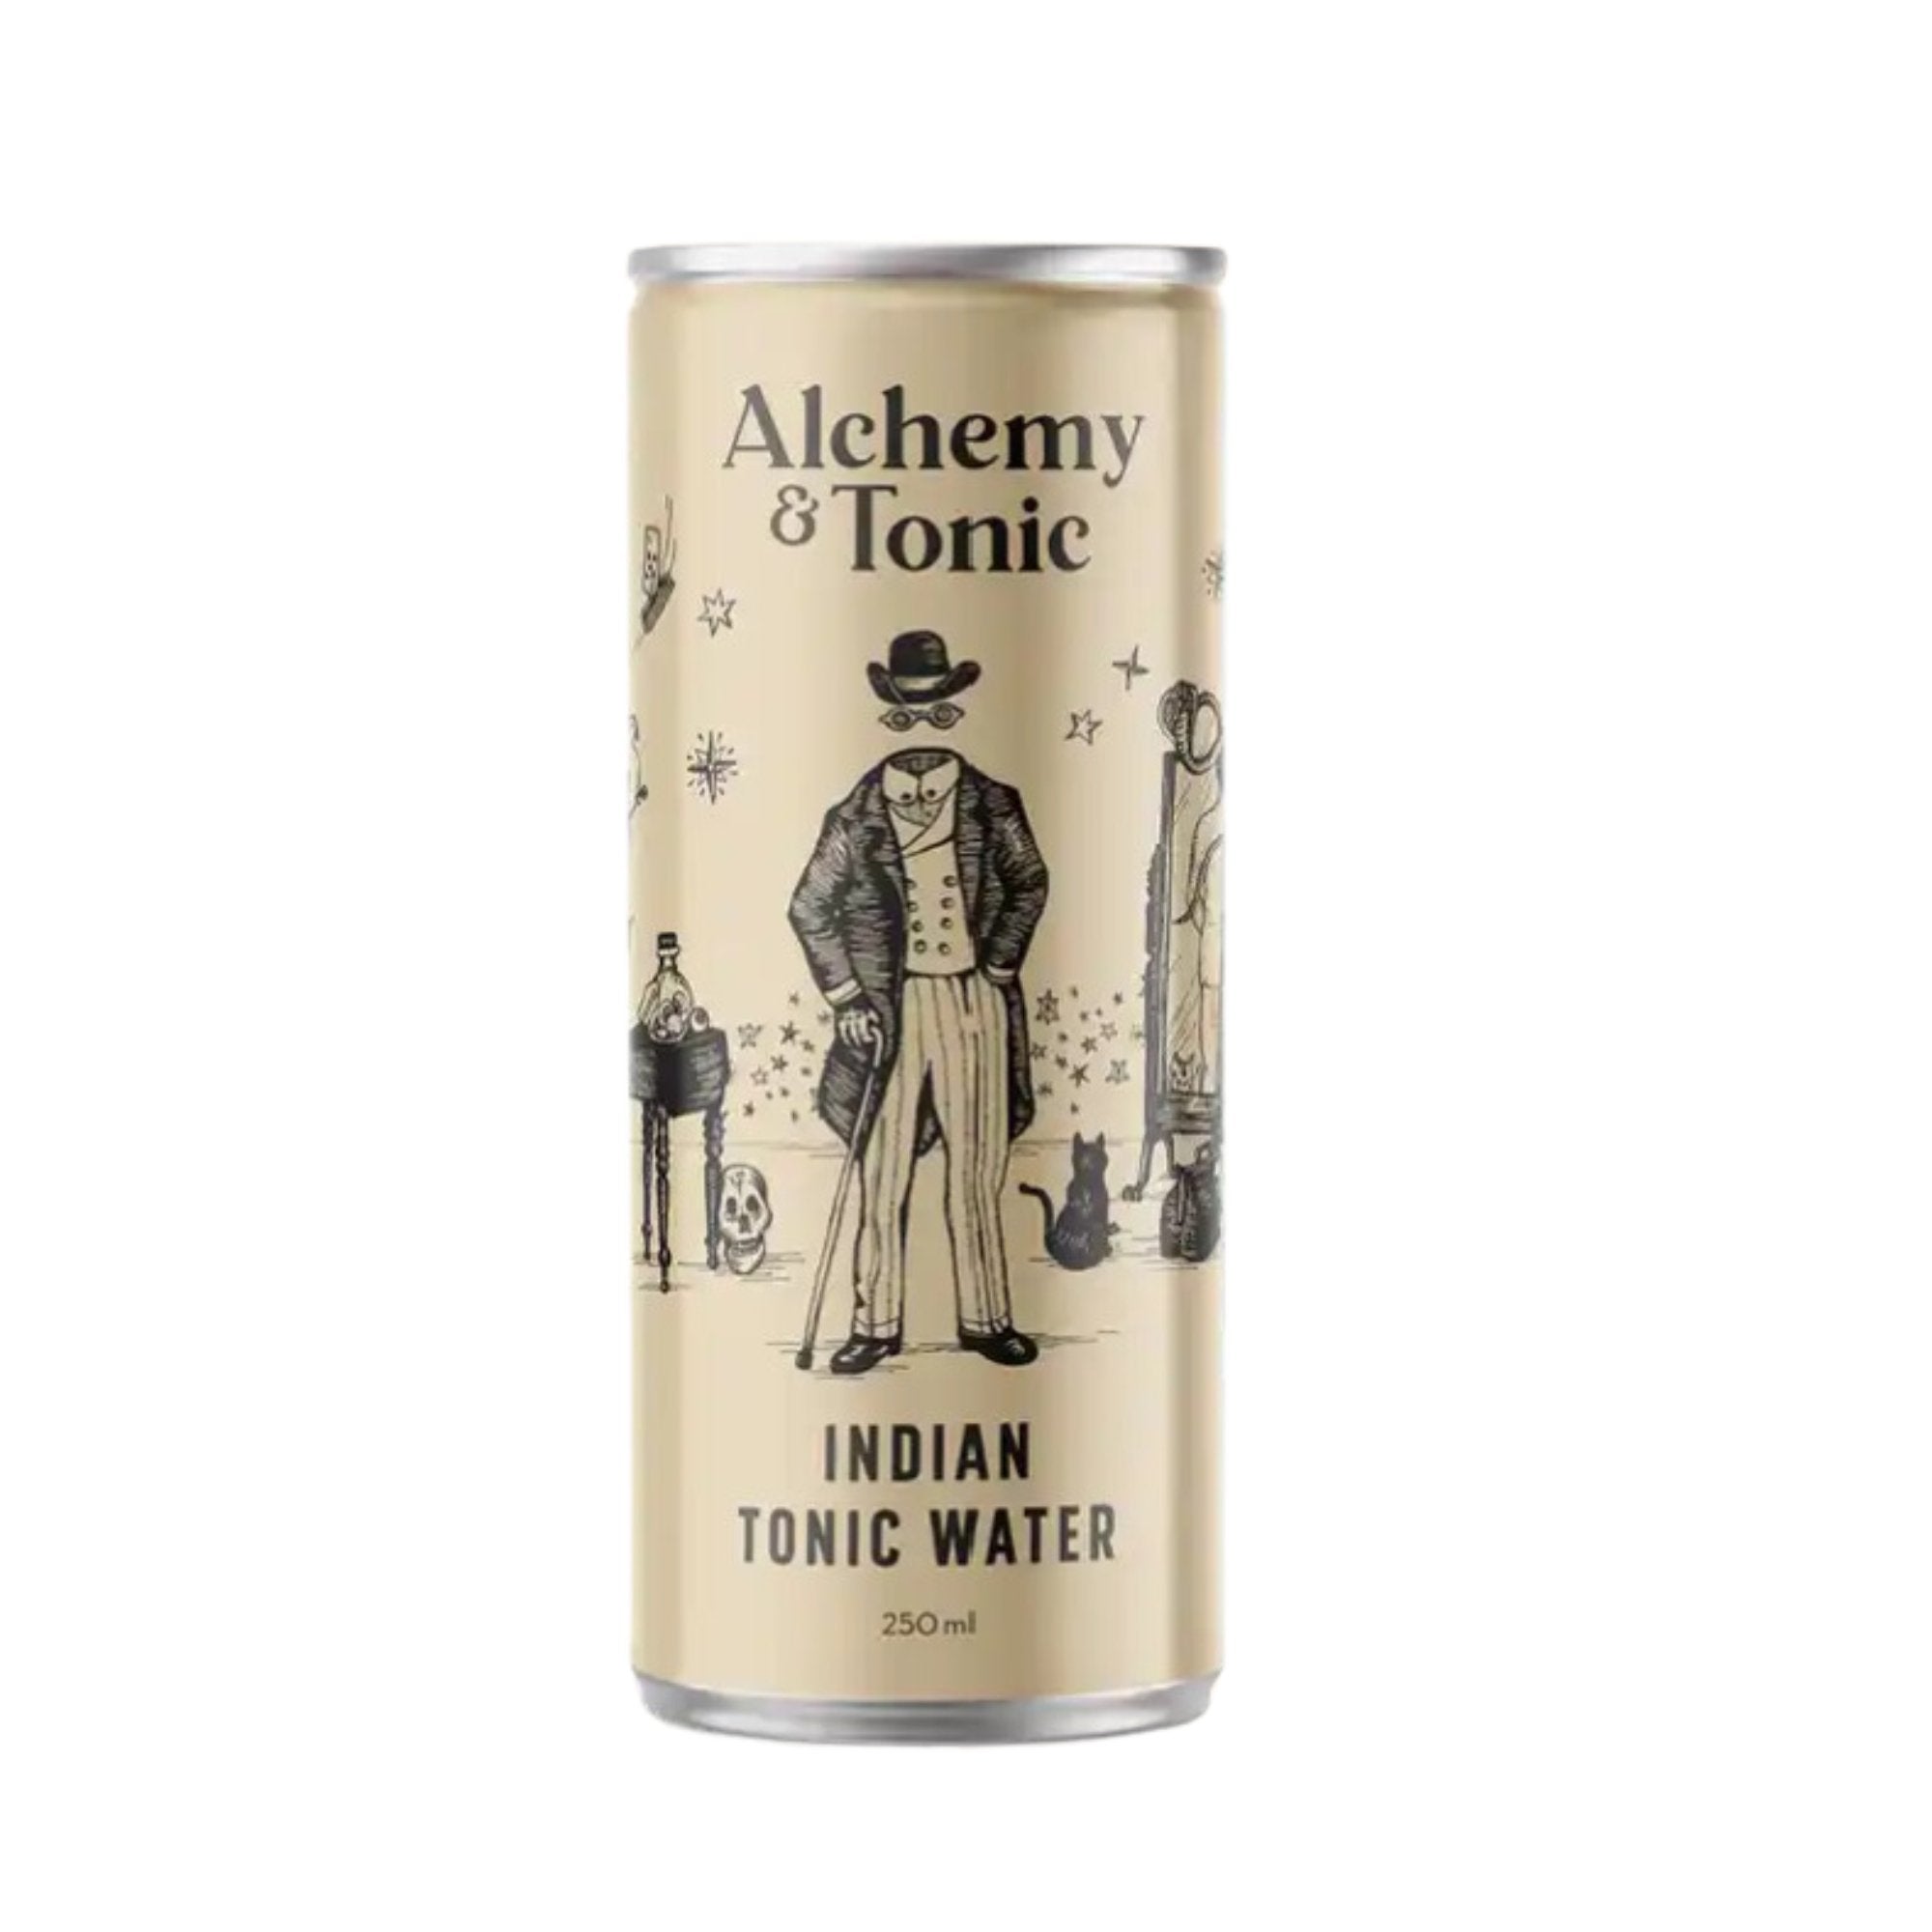 Alchemy & Tonic - Indian tonic water - 250ml can - Beautiful Gifts